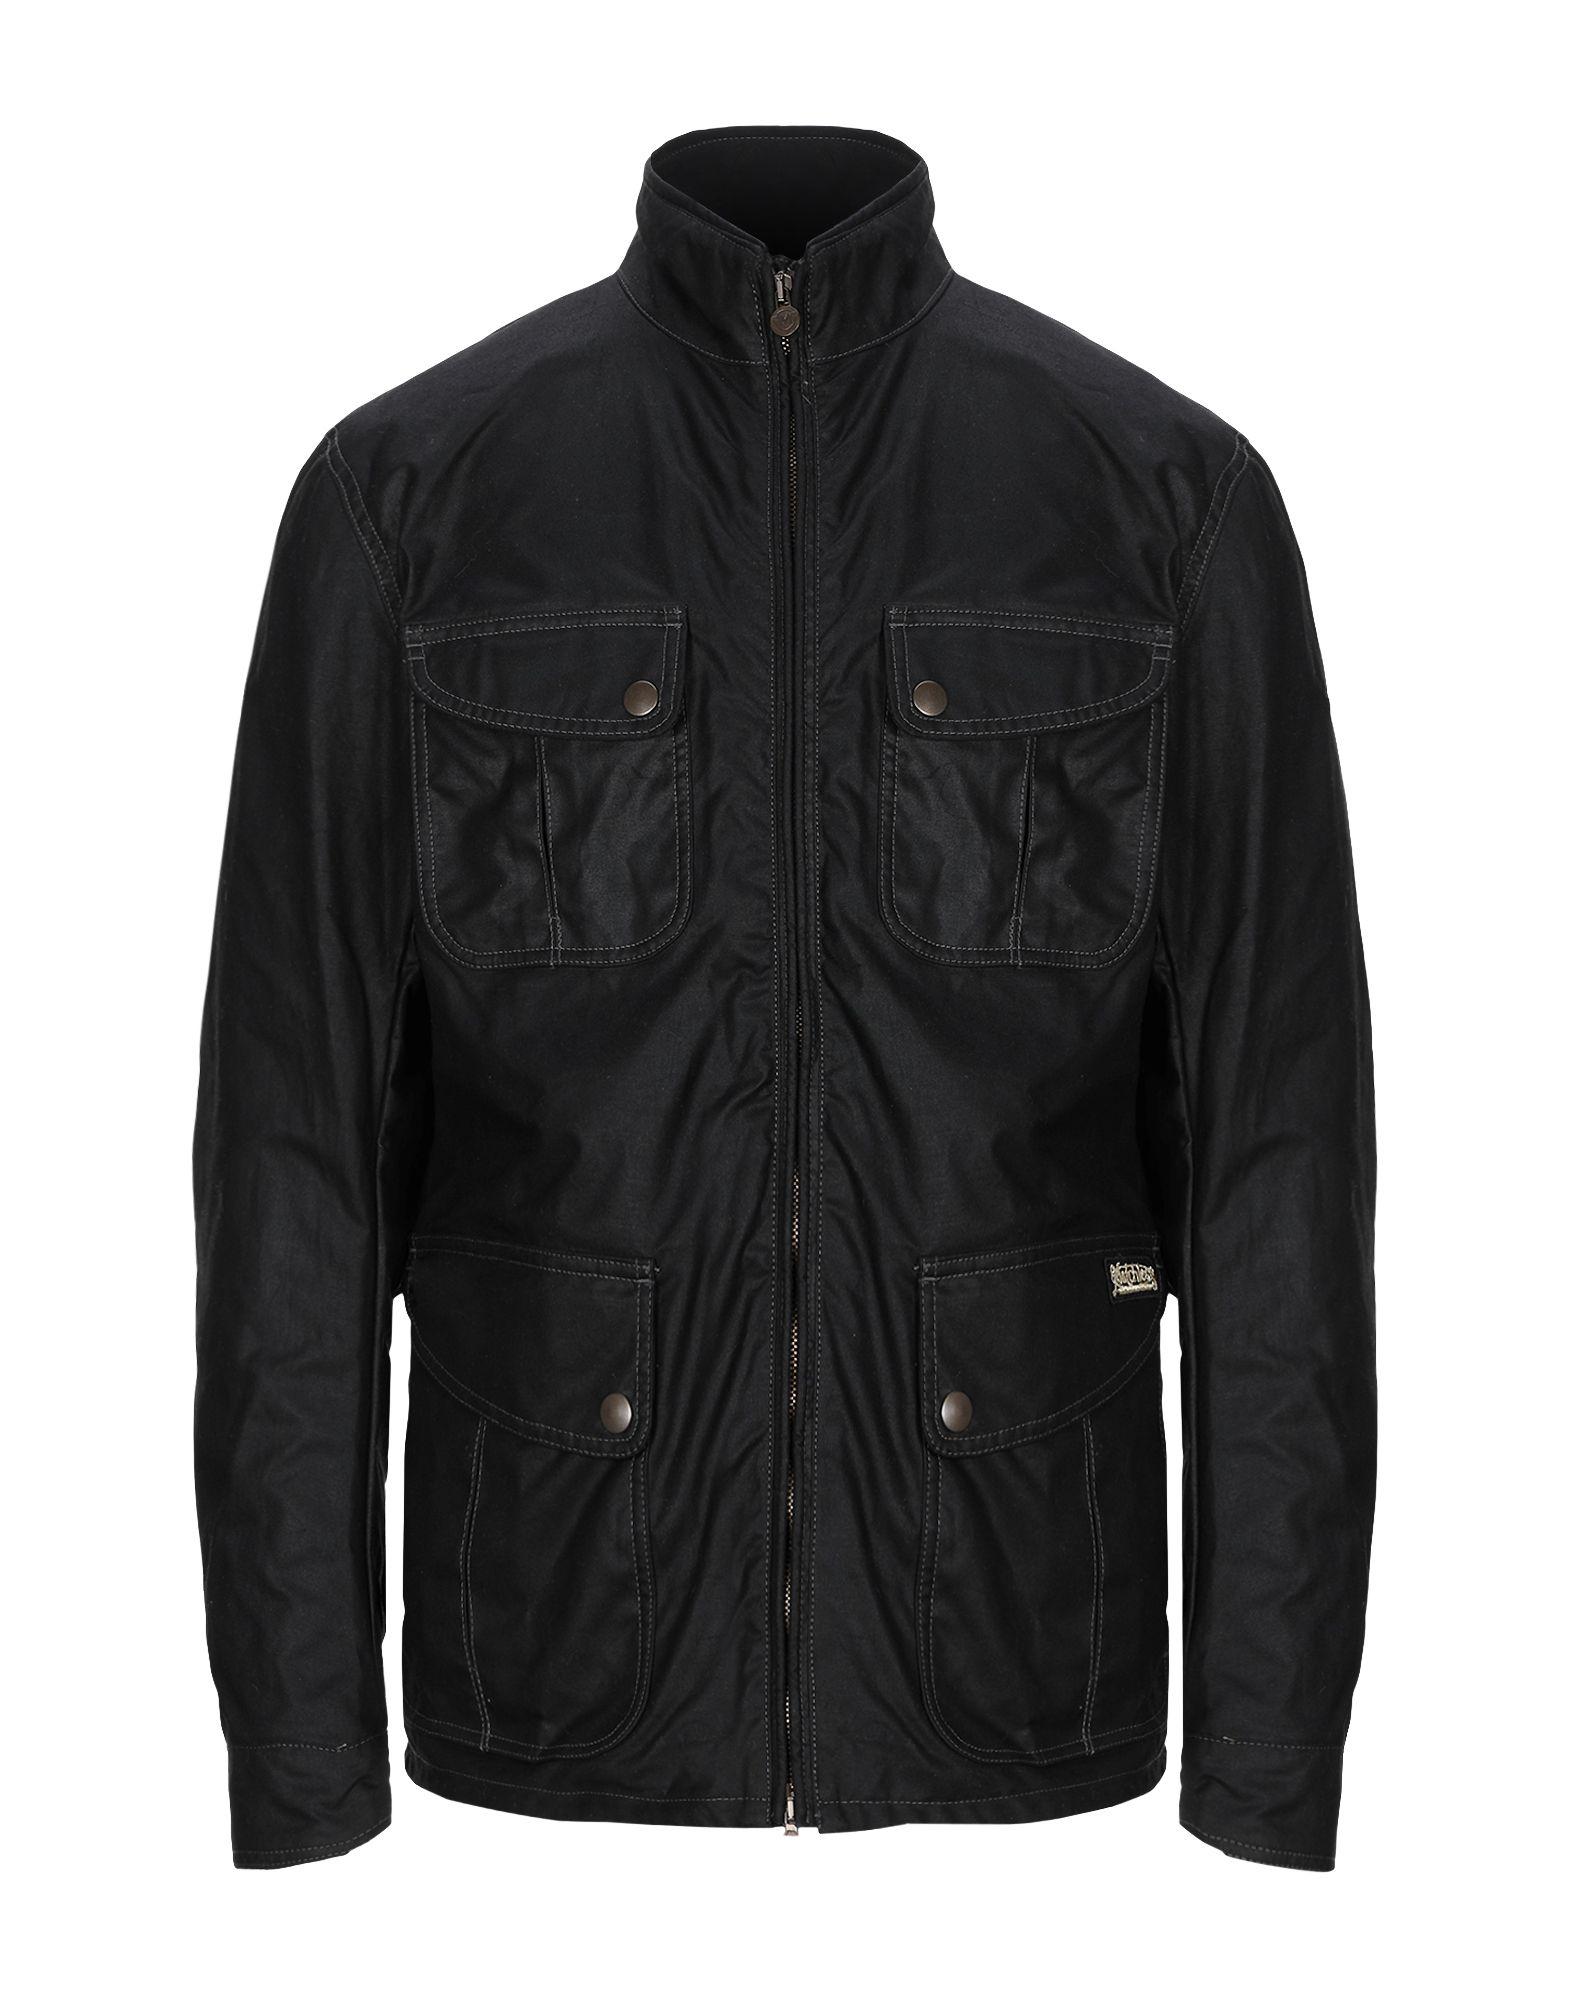 Matchless Jacket in Black for Men - Lyst